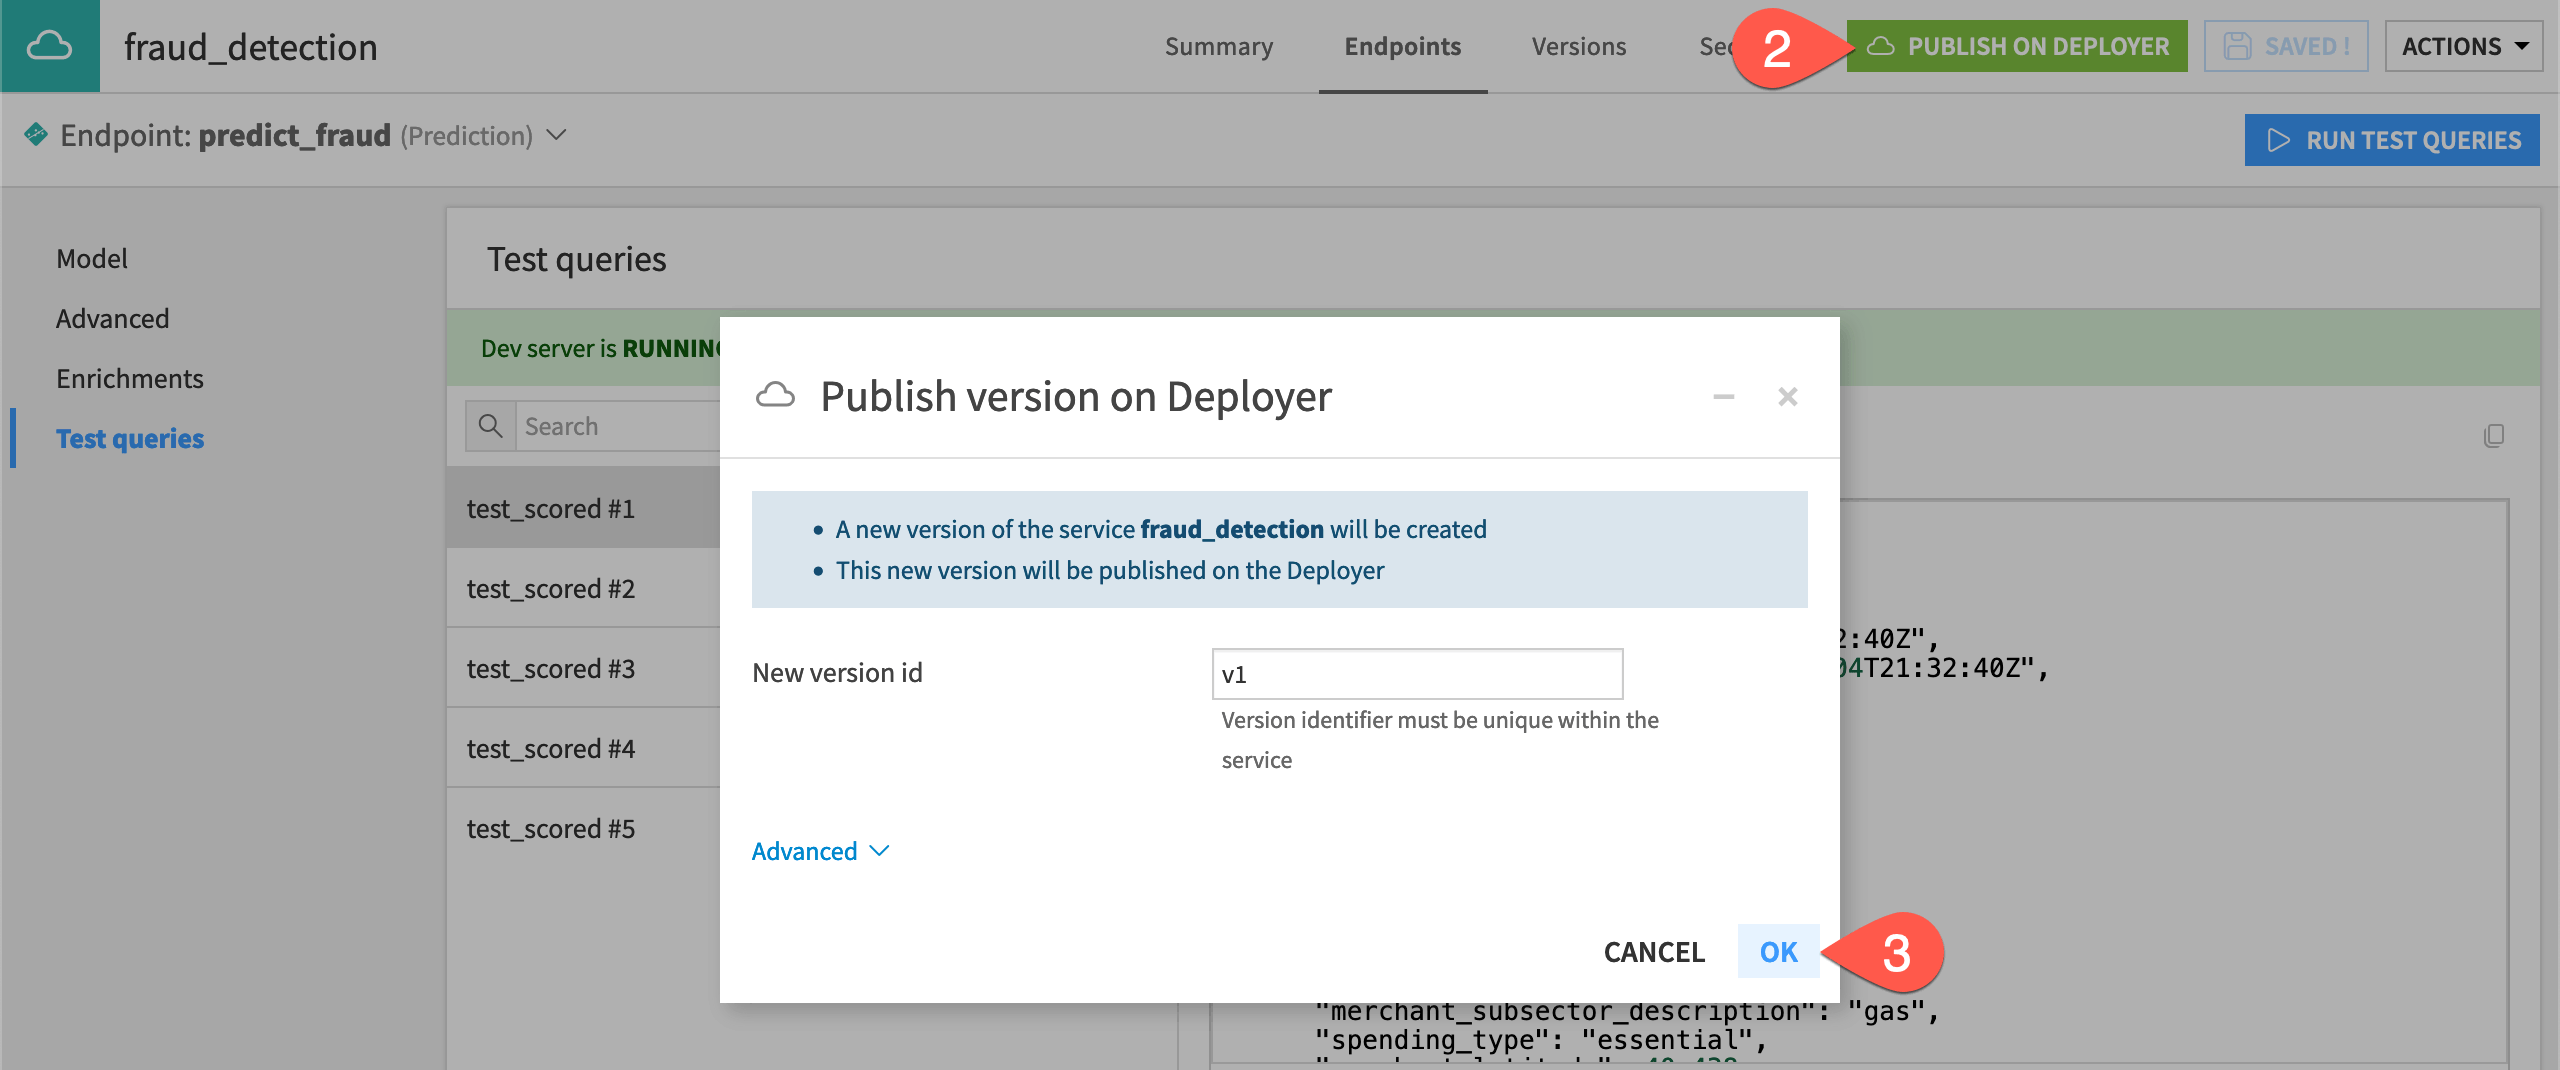 Dataiku screenshot of the dialog for deploying an API service.